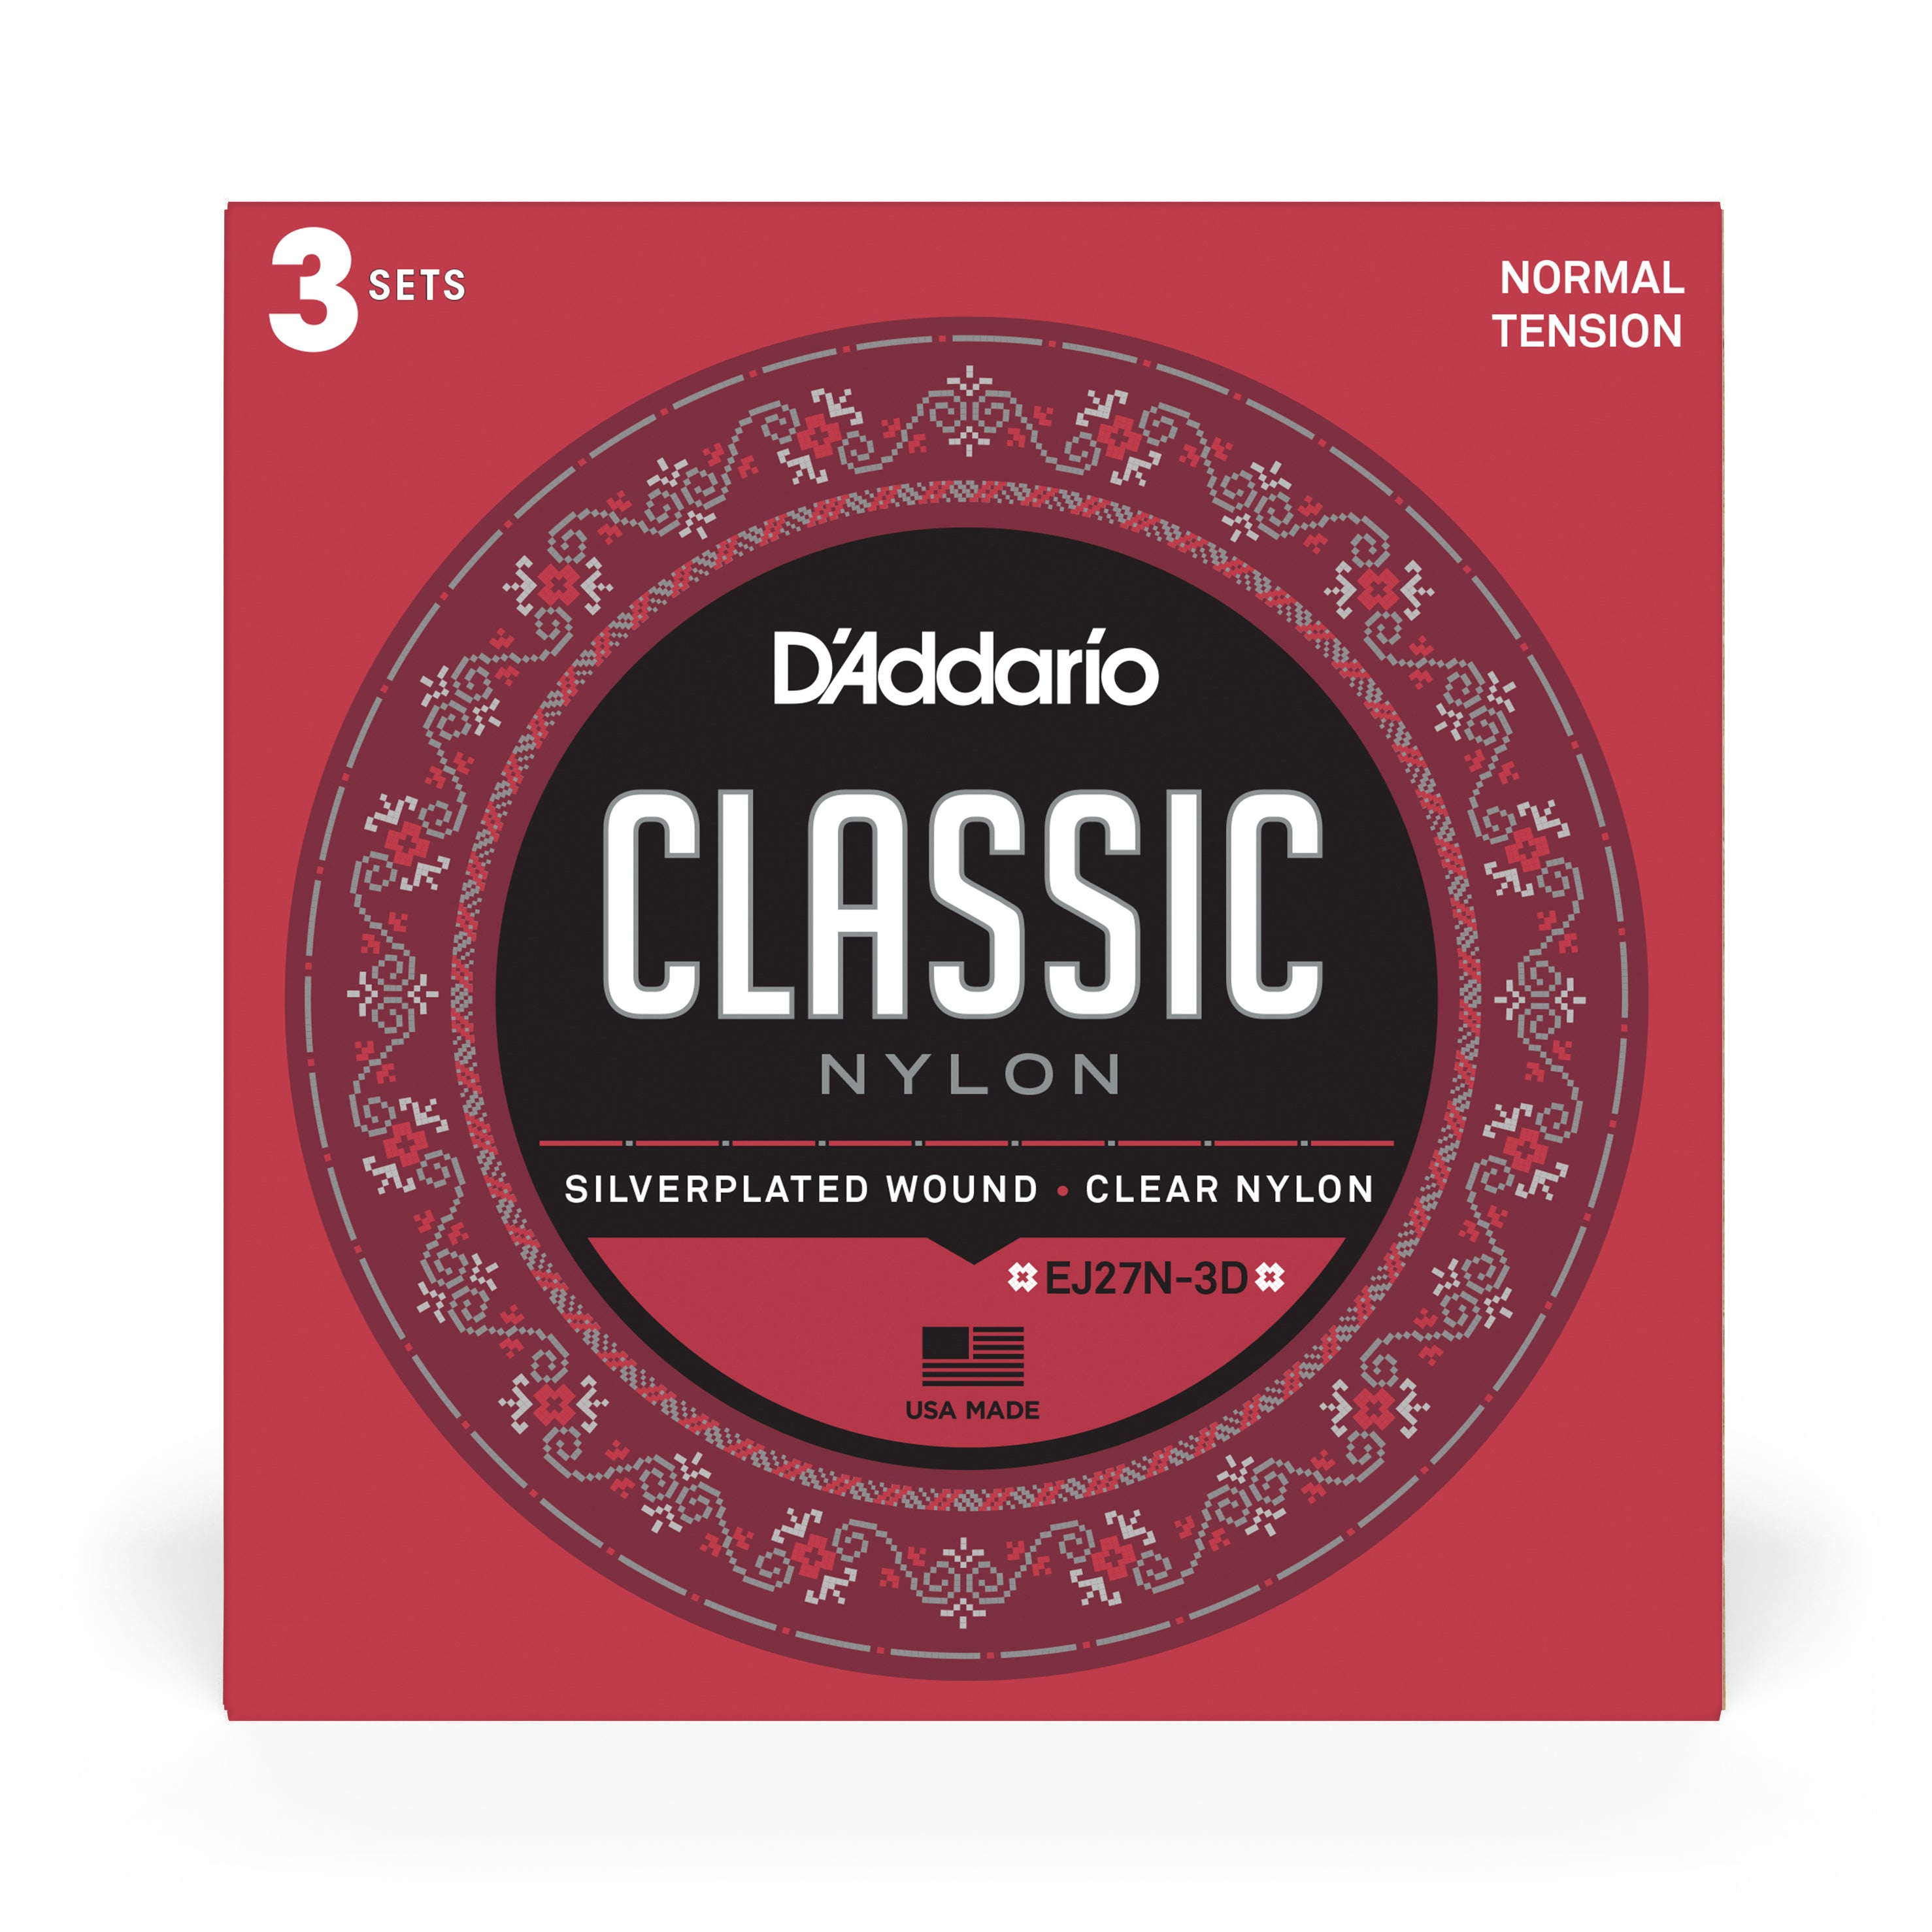 D'Addario EJ27N-3D Student Classical Normal Tension Full Size Guitar Strings 3-Pack